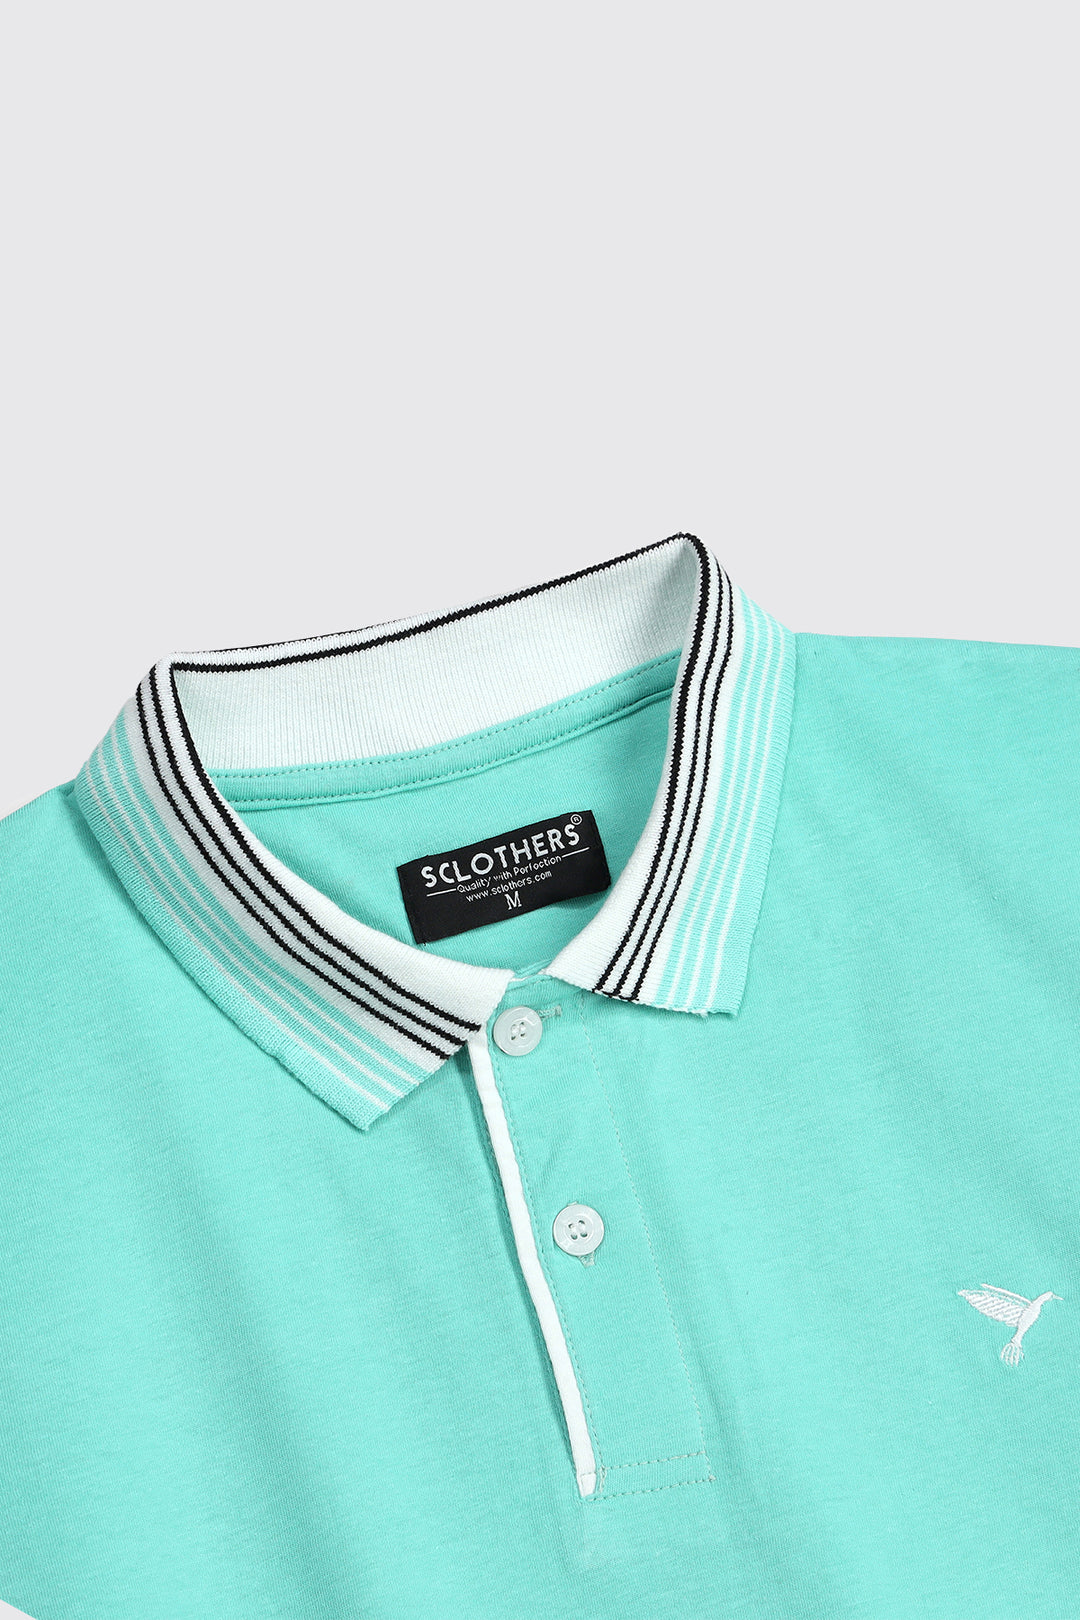 Aqua Green Contrast Jacquard Collar Polo Shirt - A23 - MP0188R